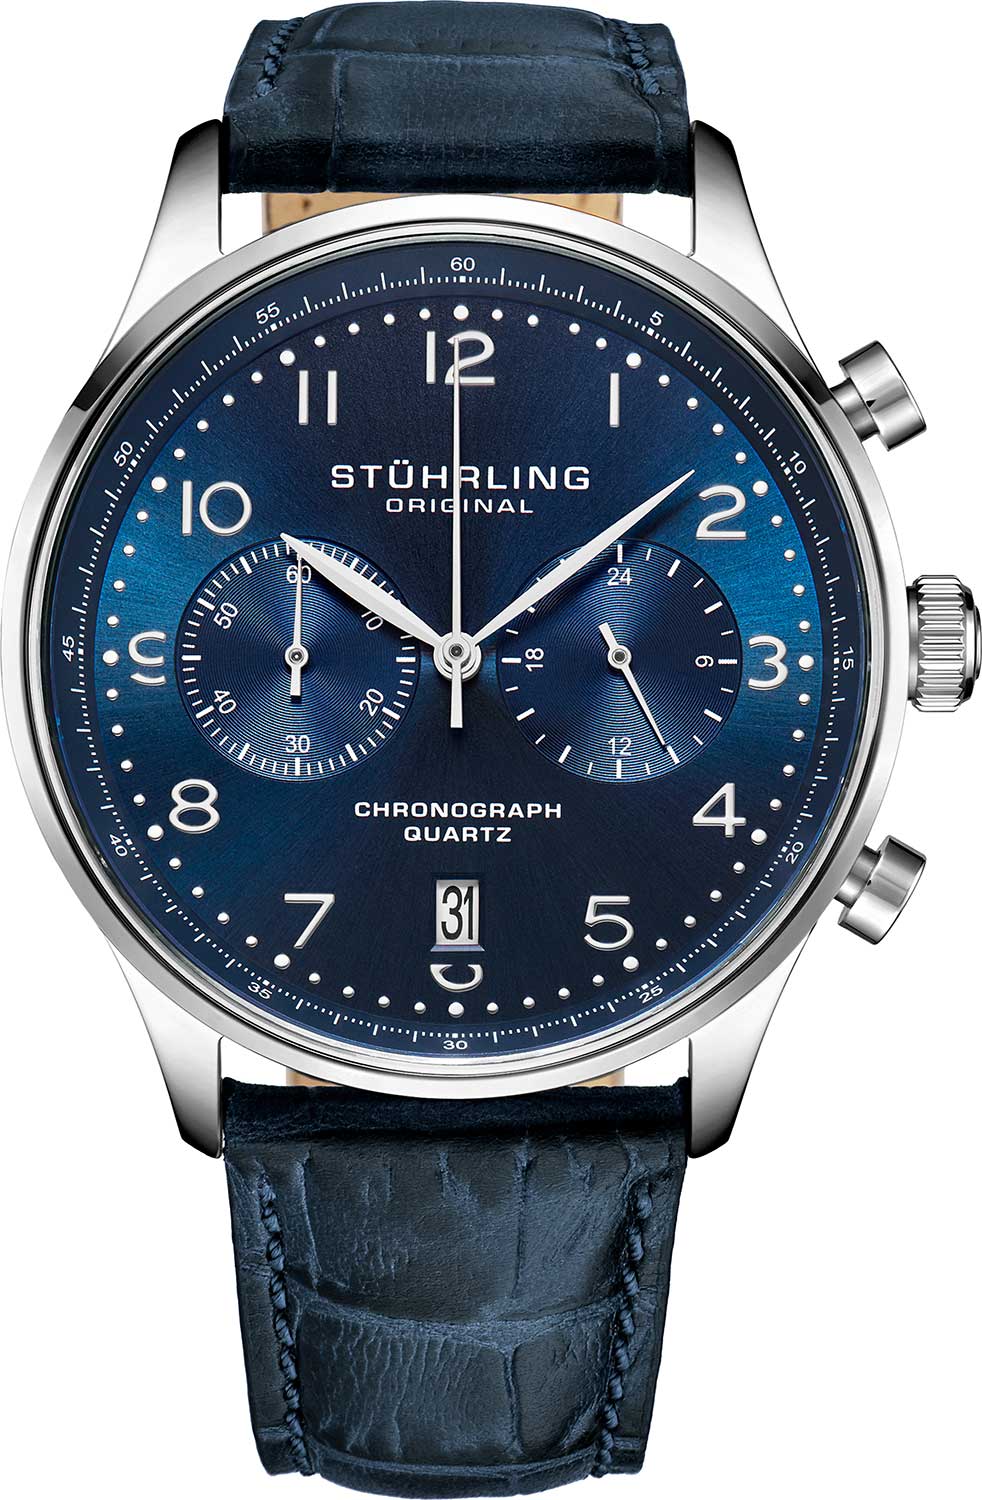 Наручные часы Stuhrling 4012.3 с хронографом